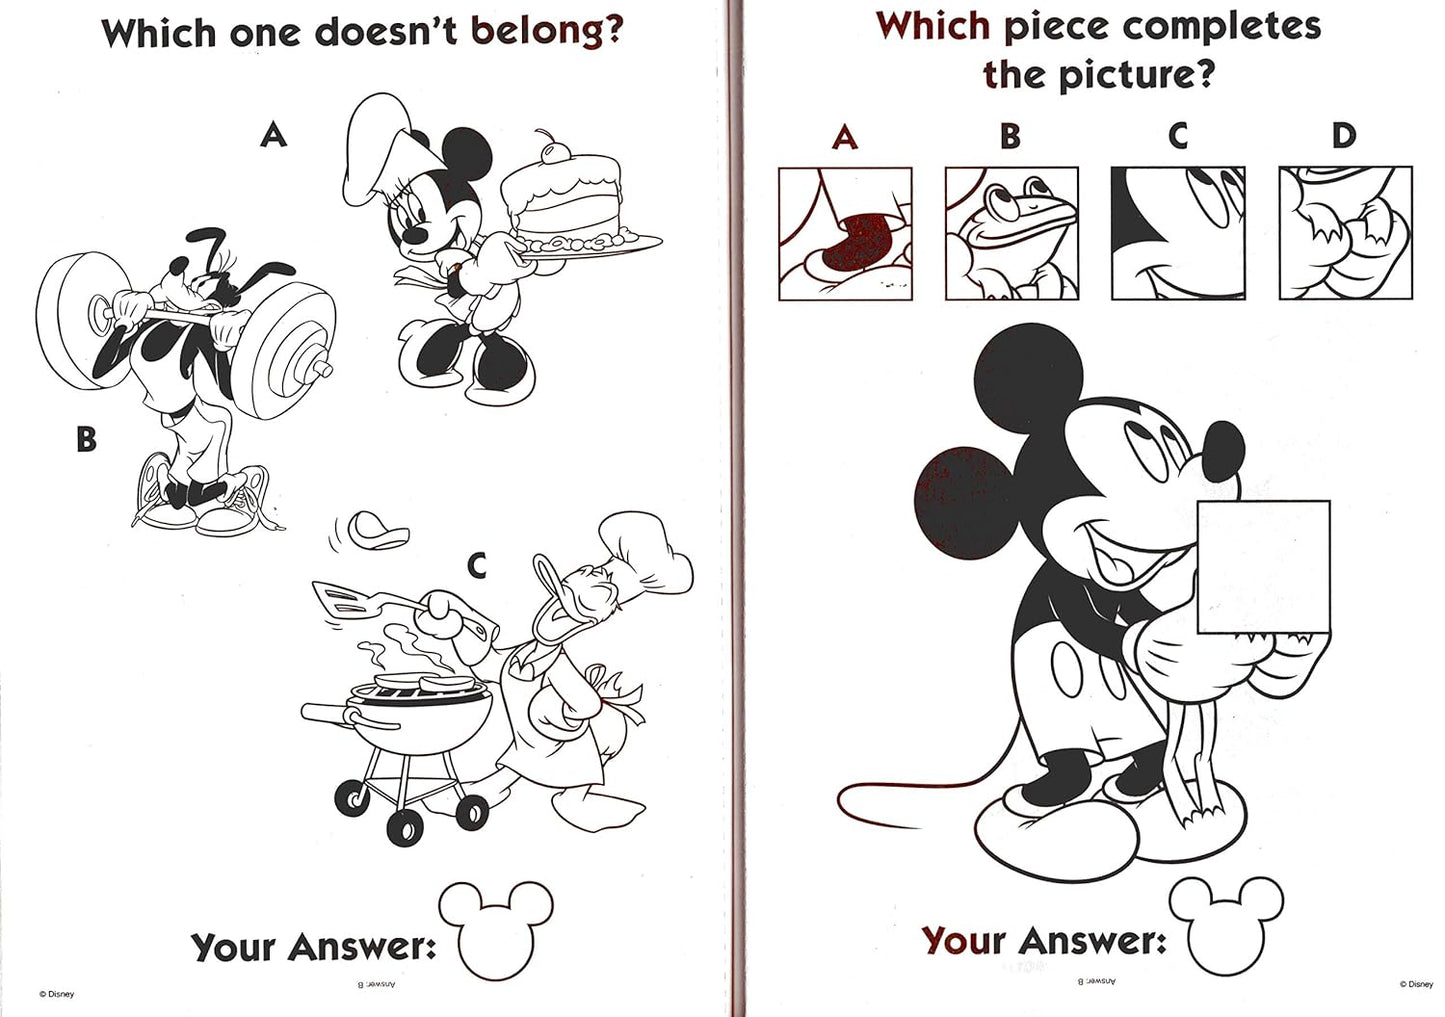 Disney Mickey Friends & Minnie - Jumbo Coloring & Activity Book (Set of 2 Books)